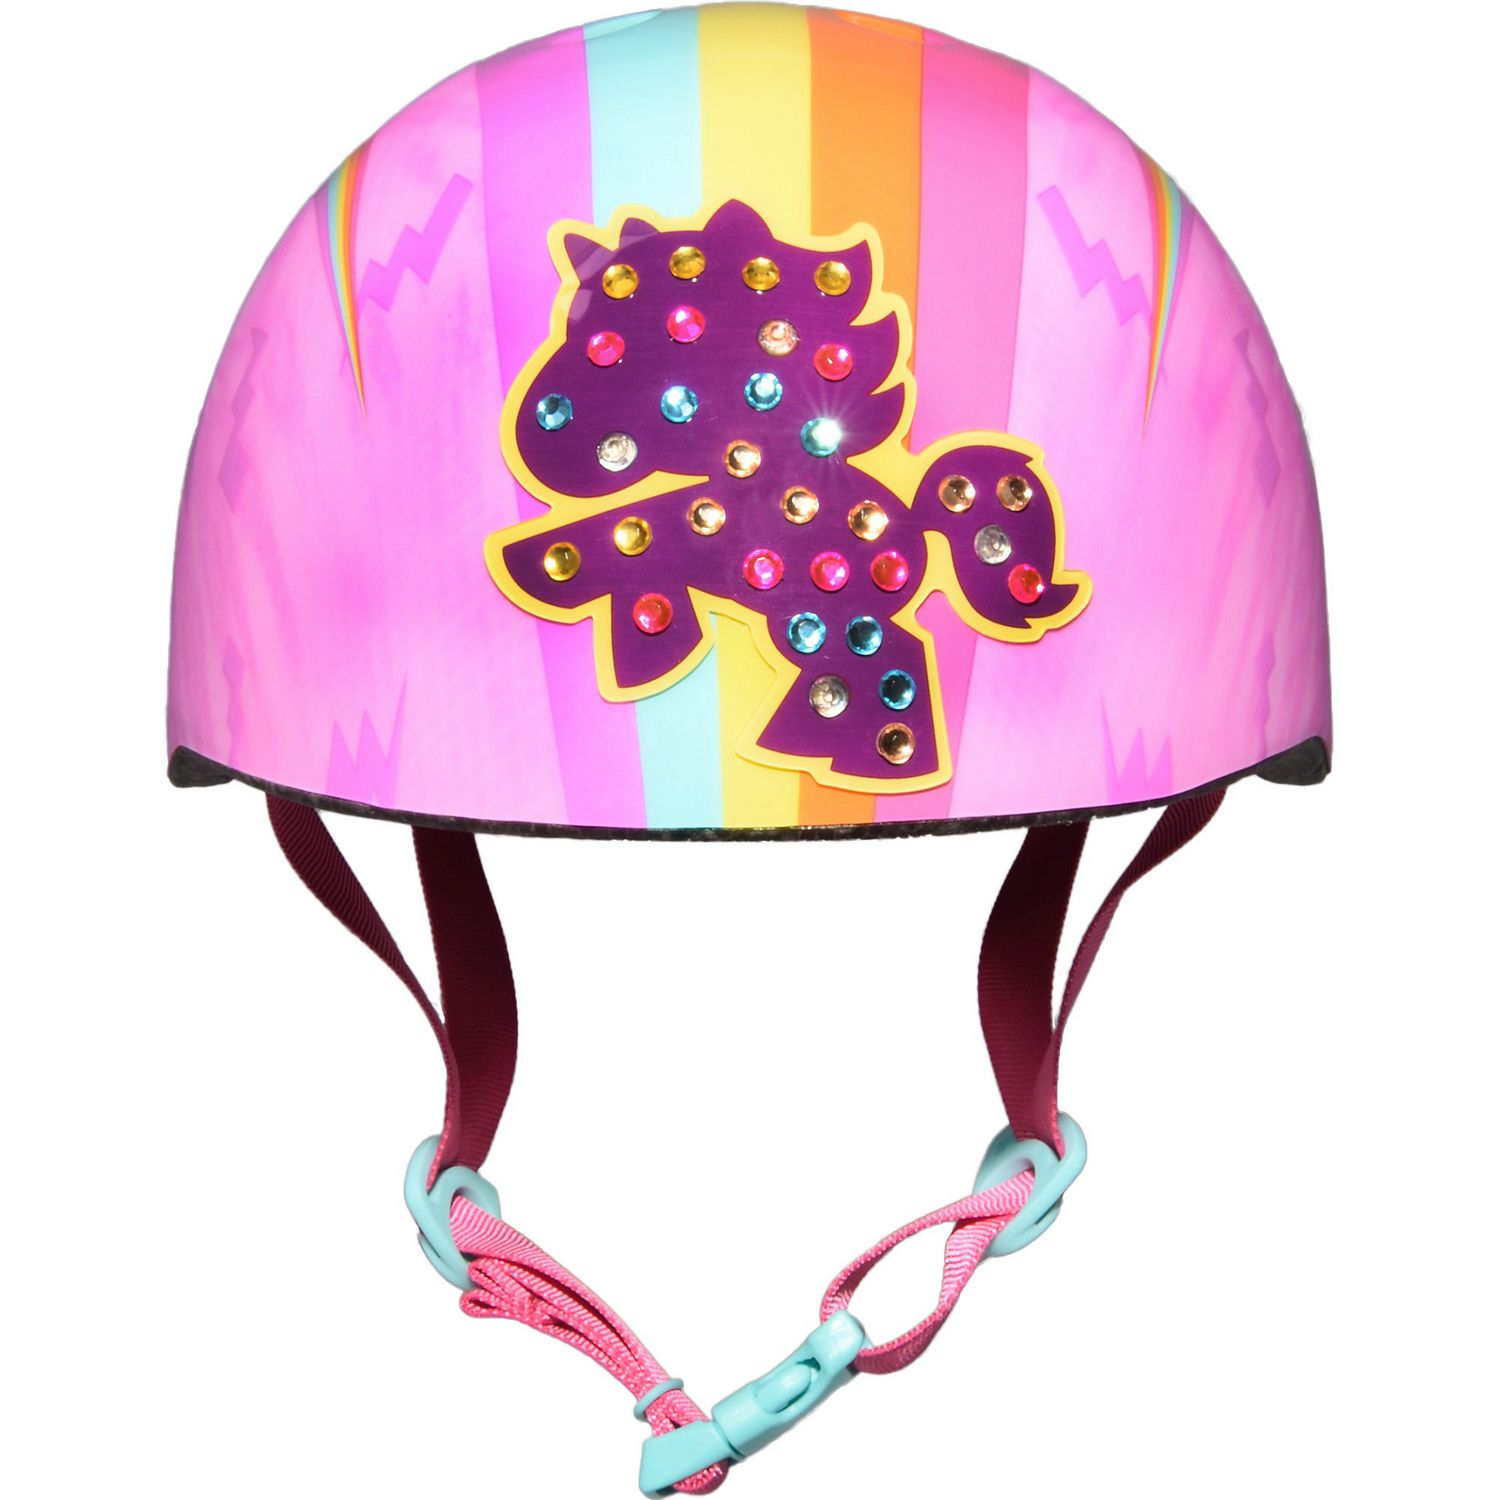 walmart unicorn helmet